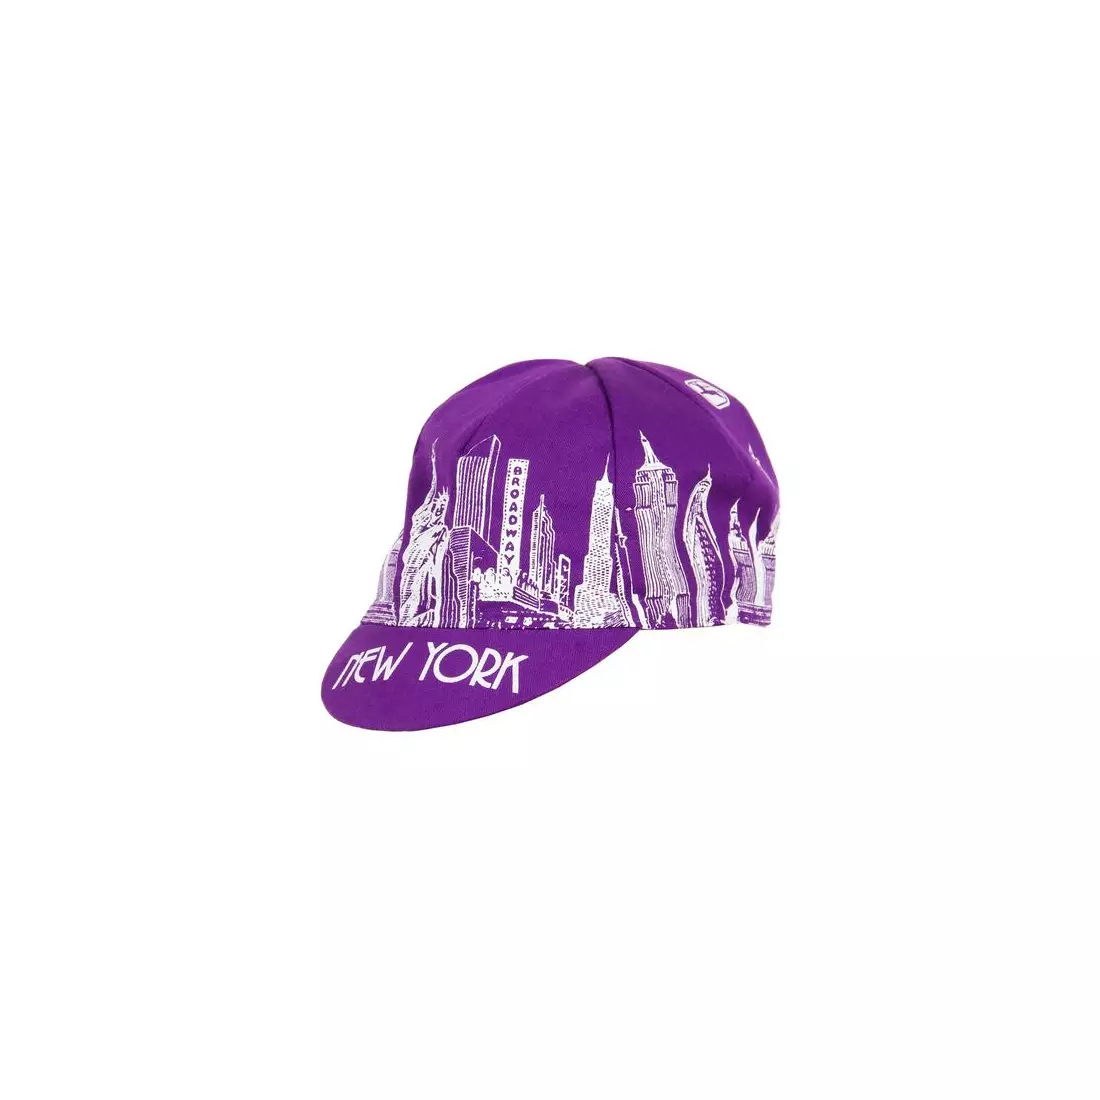 GIORDANA SS18 cycling cap - New York City Landmarks - Purple/White GI-S5-COCA-NYCL-PURP one size